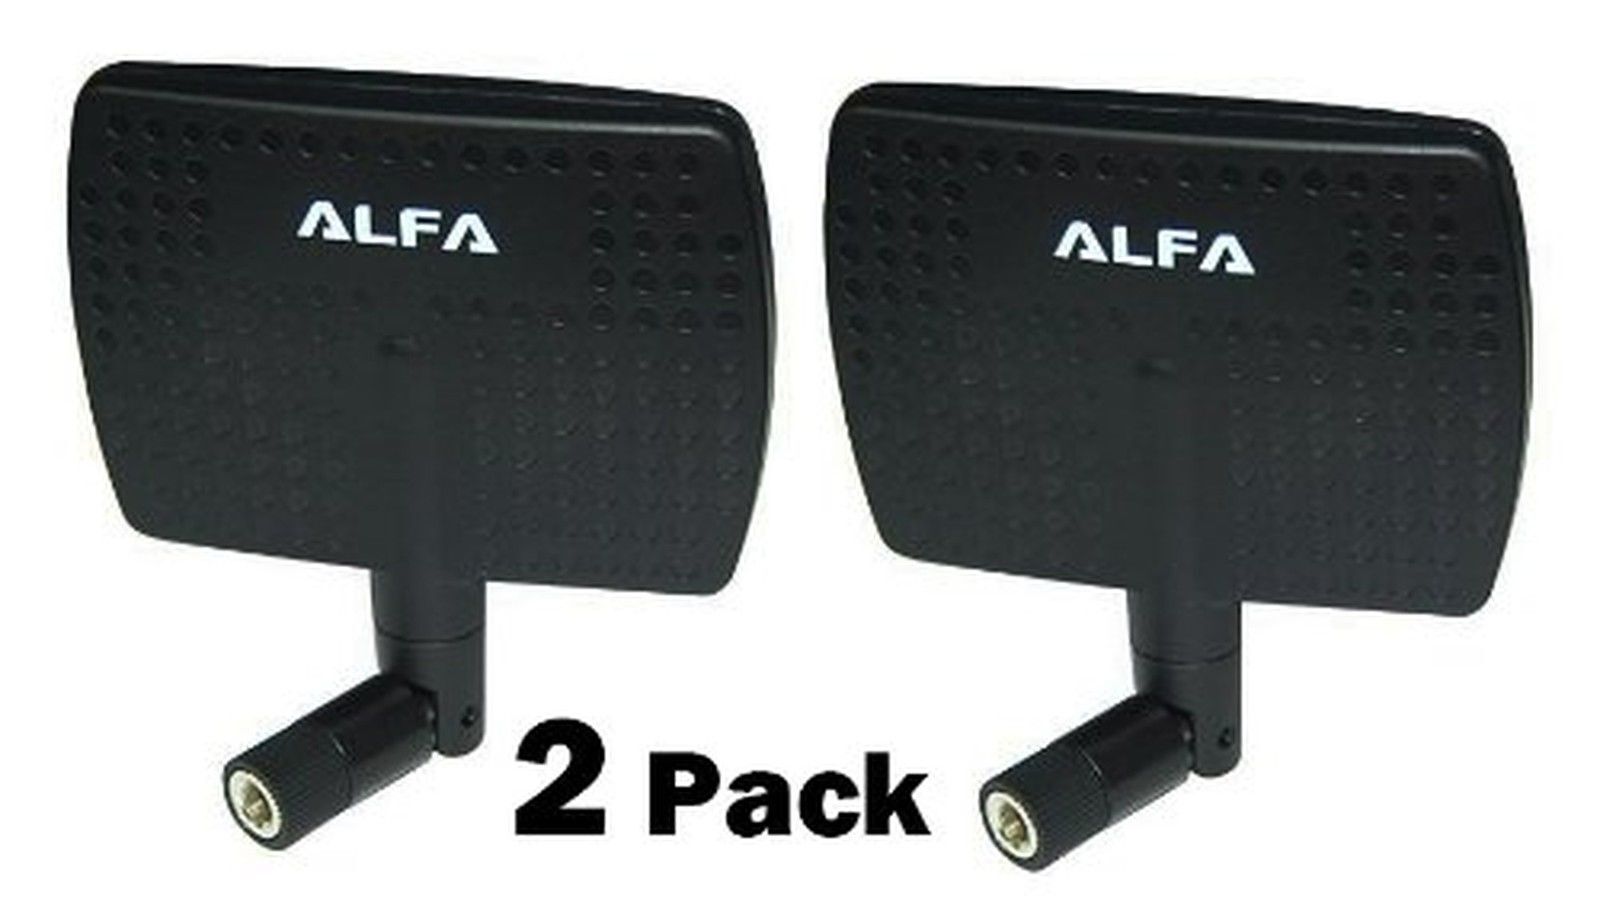 2 Pack Alfa APA-M04 2.4HGz 7 dBi Booster RP-SMA Panel High-Gain Swivel Antenna